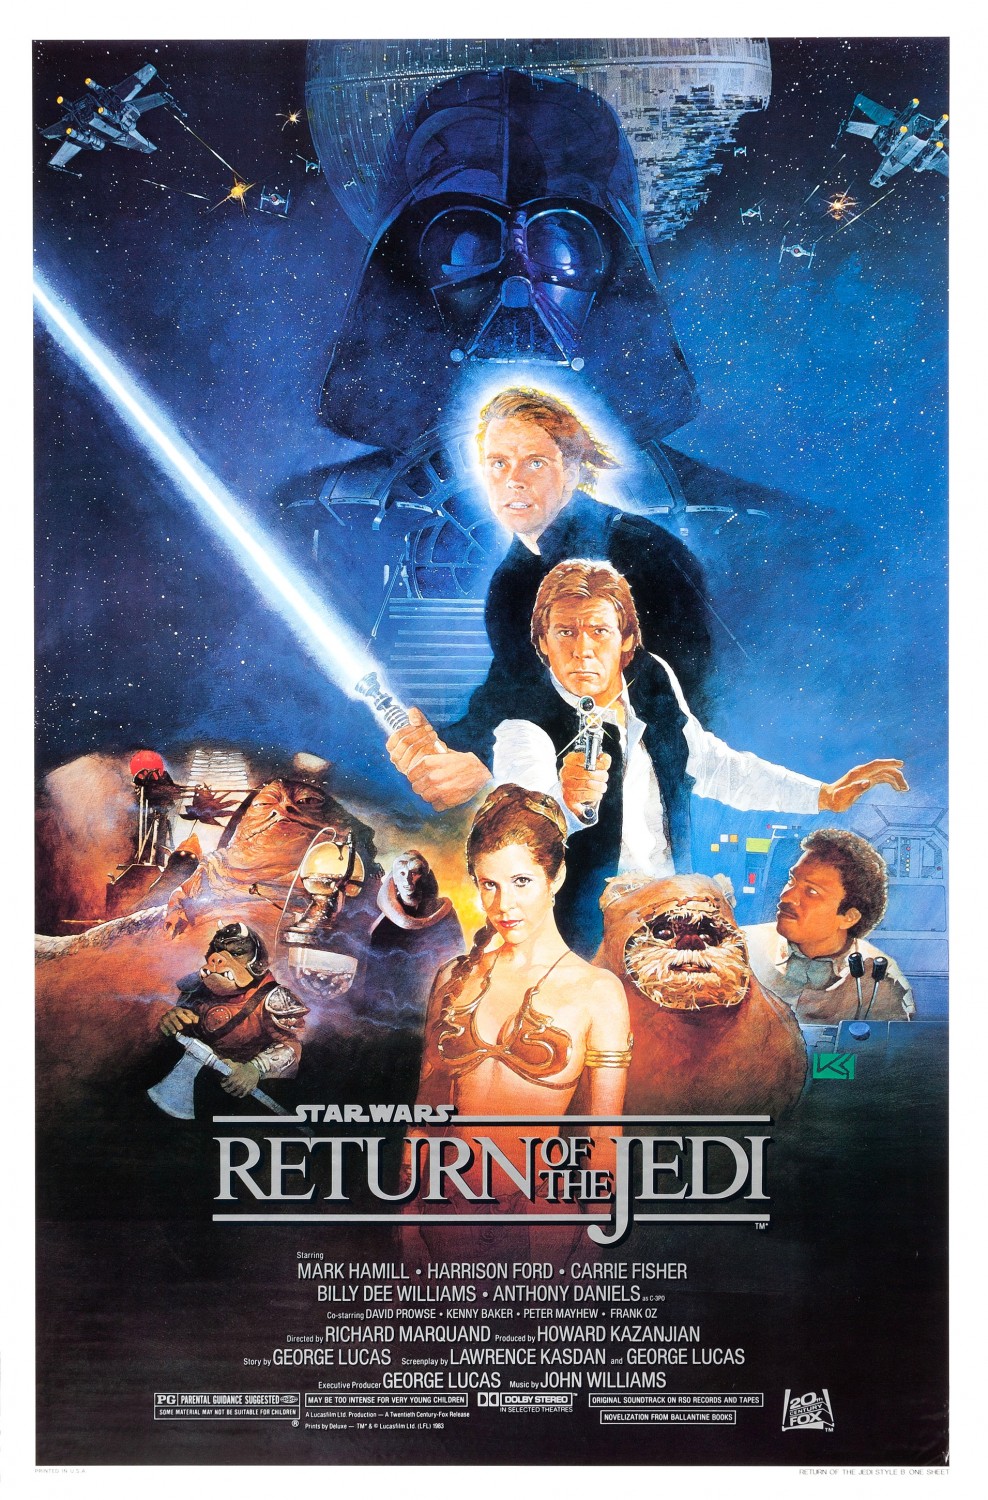 Star Wars: Episode VI – Return of the Jedi Film Review